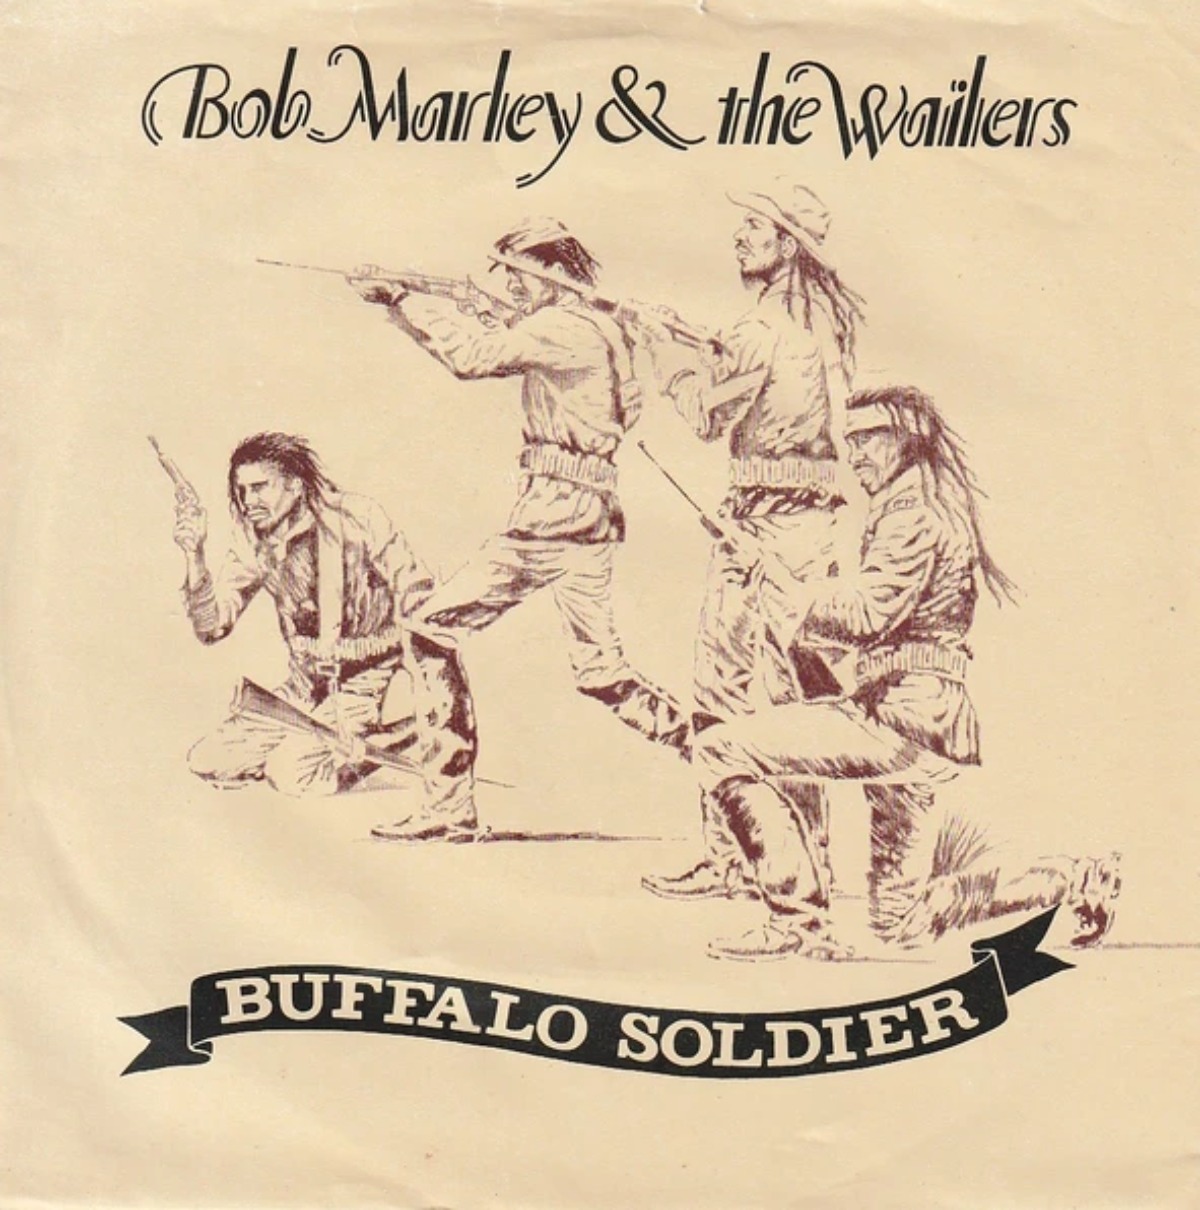 "Buffalo Soldier" (1983) - Bob Marley & The Wailers - Portada del single